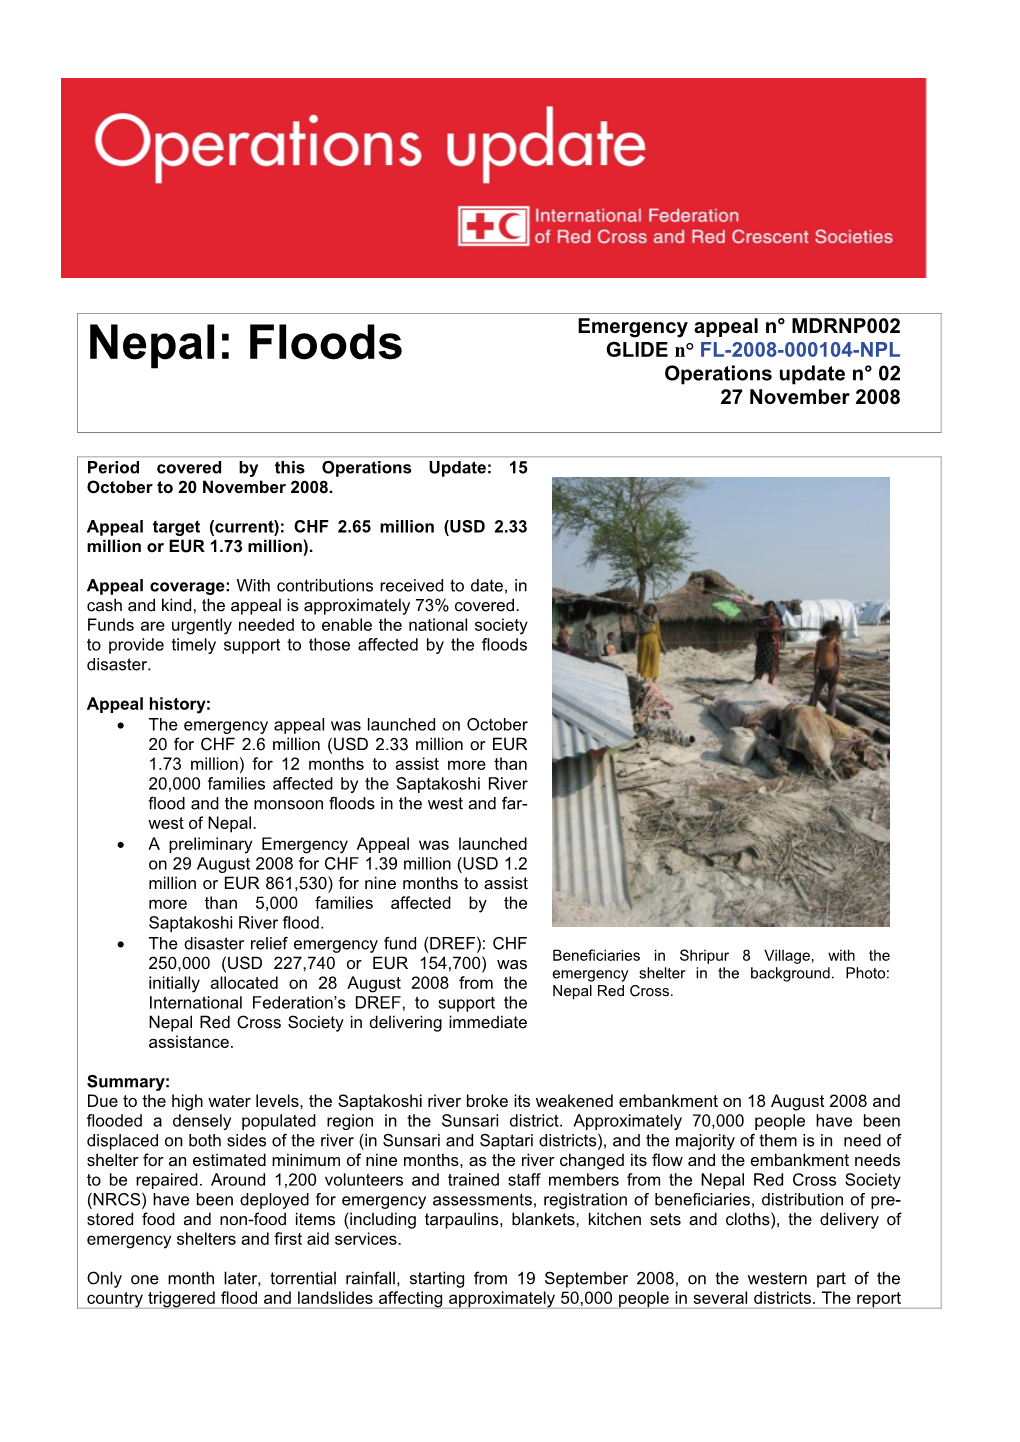 Nepal: Floods GLIDE N° FL-2008-000104-NPL Operations Update N° 02 27 November 2008